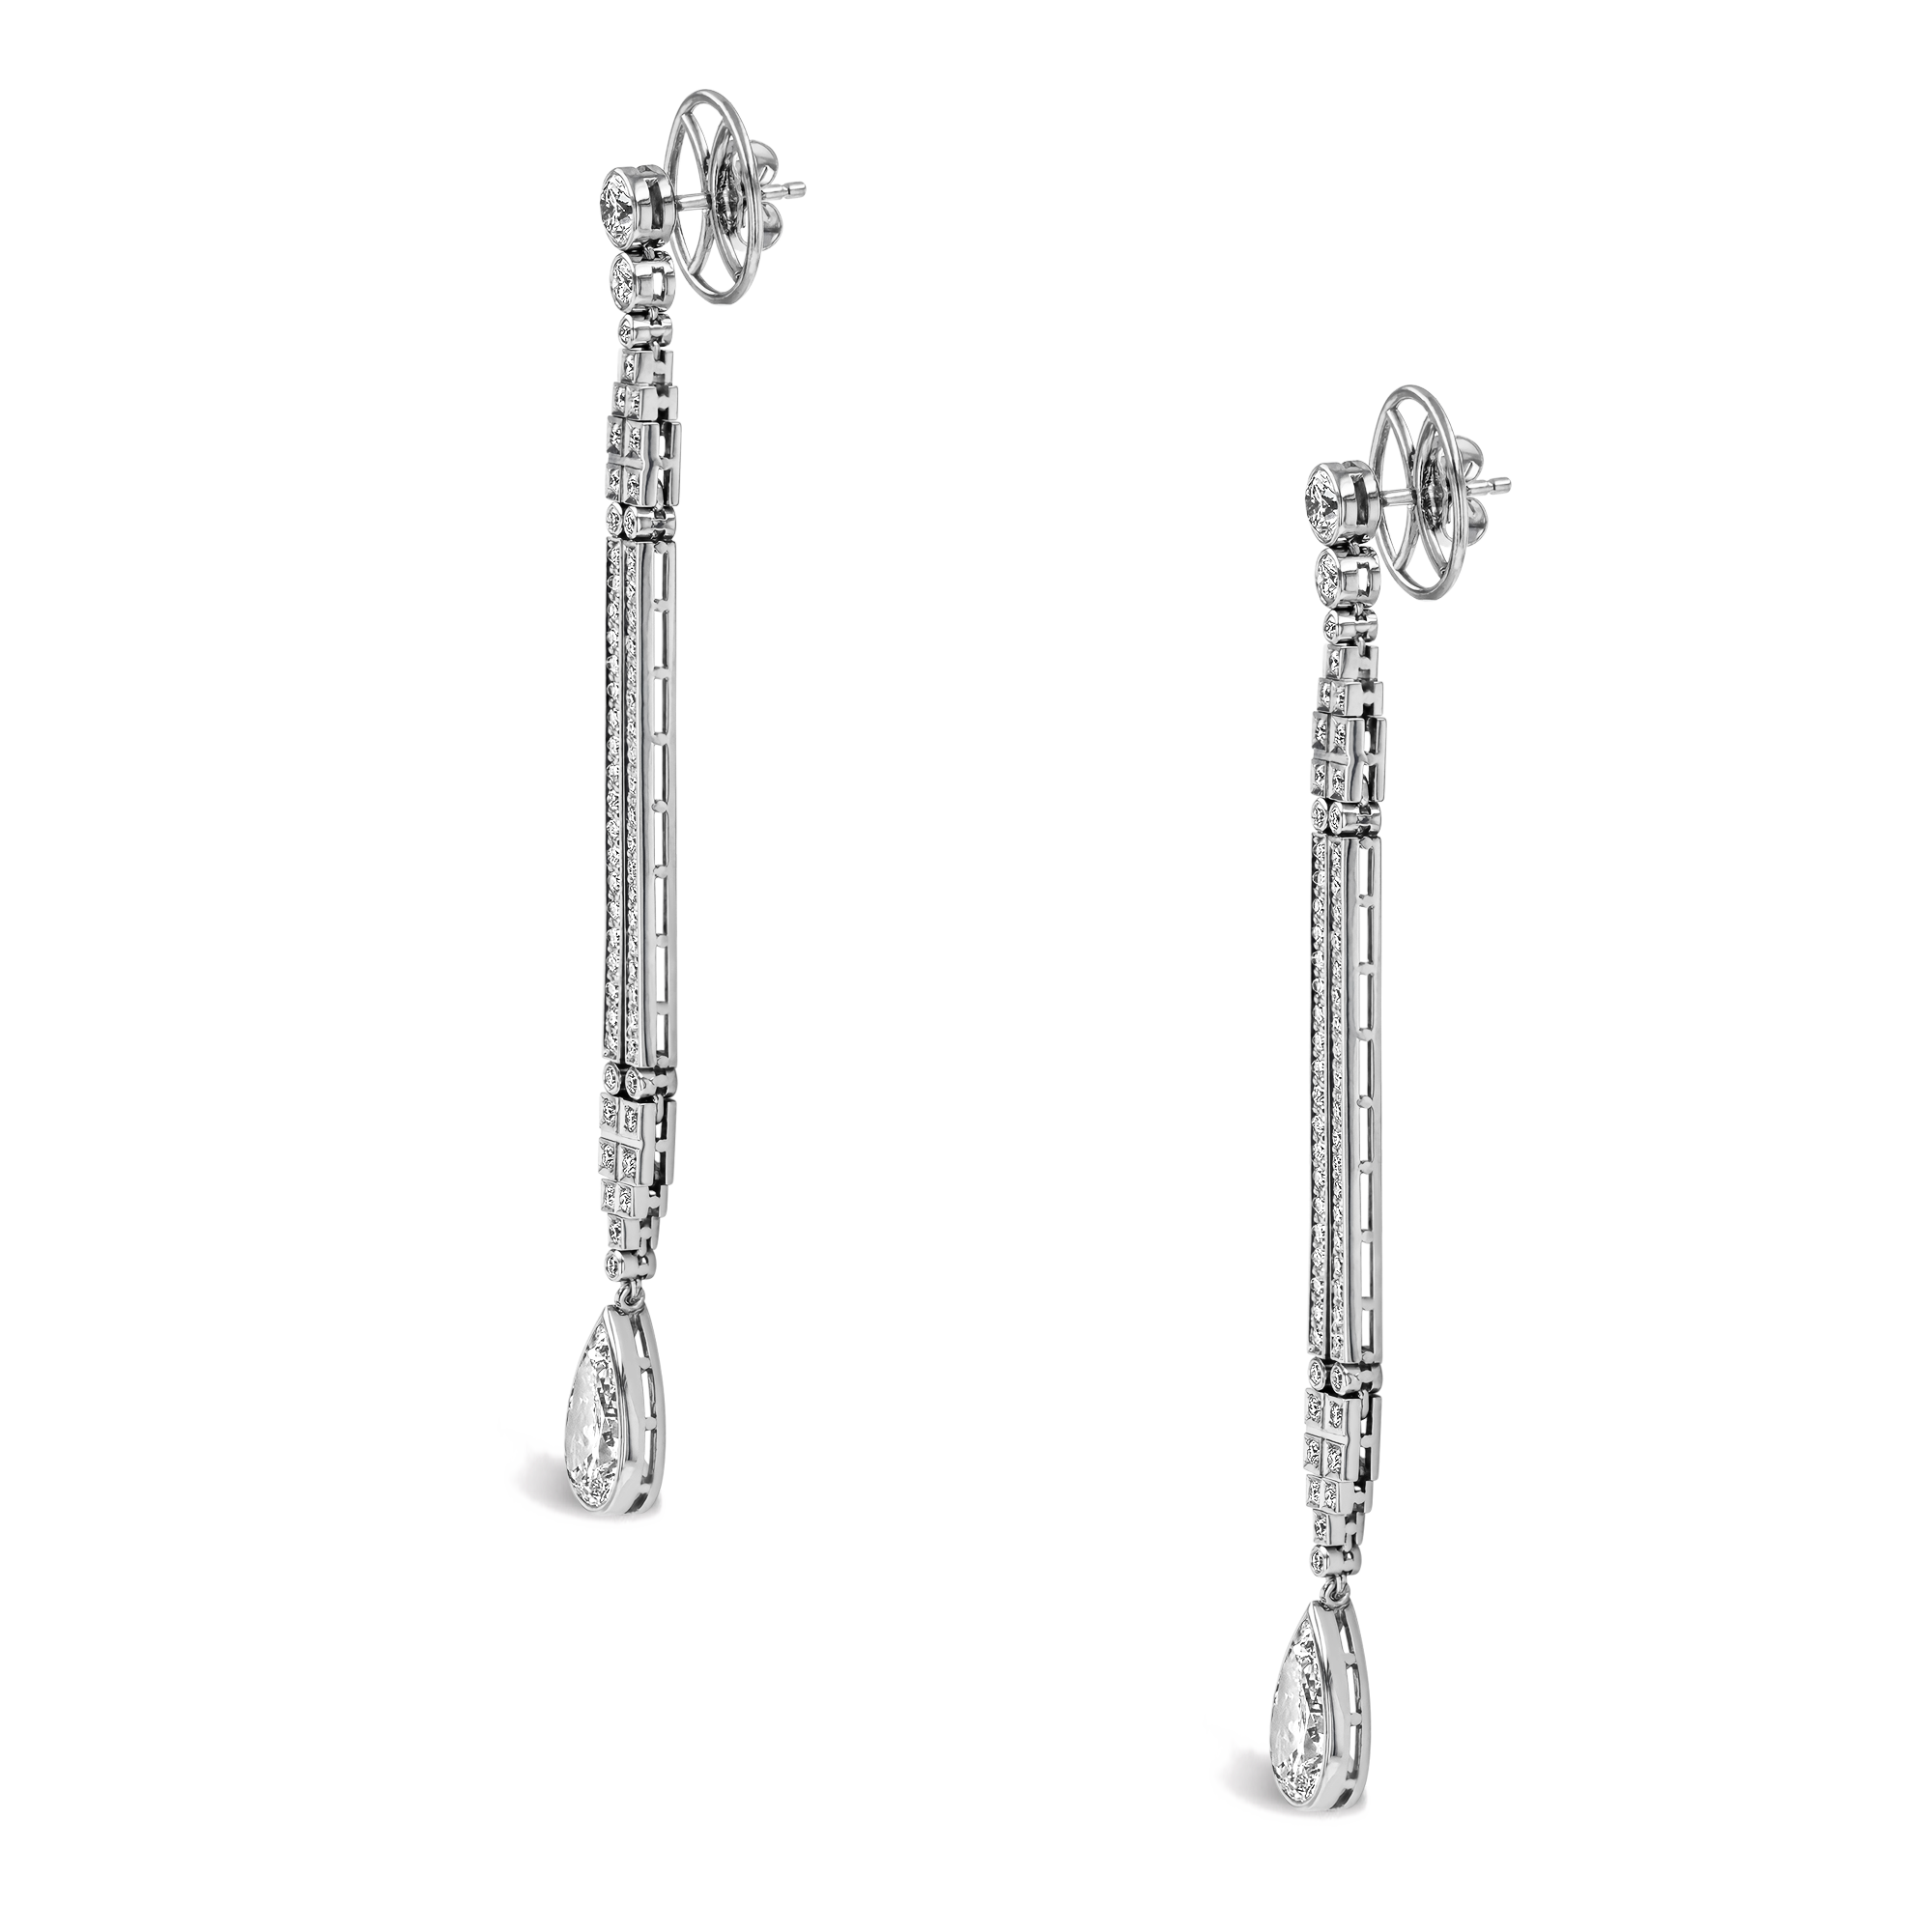 Masterpiece Pearshape Diamond Articulated Drop Earrings Pearshape Cut, Rubover Set_2